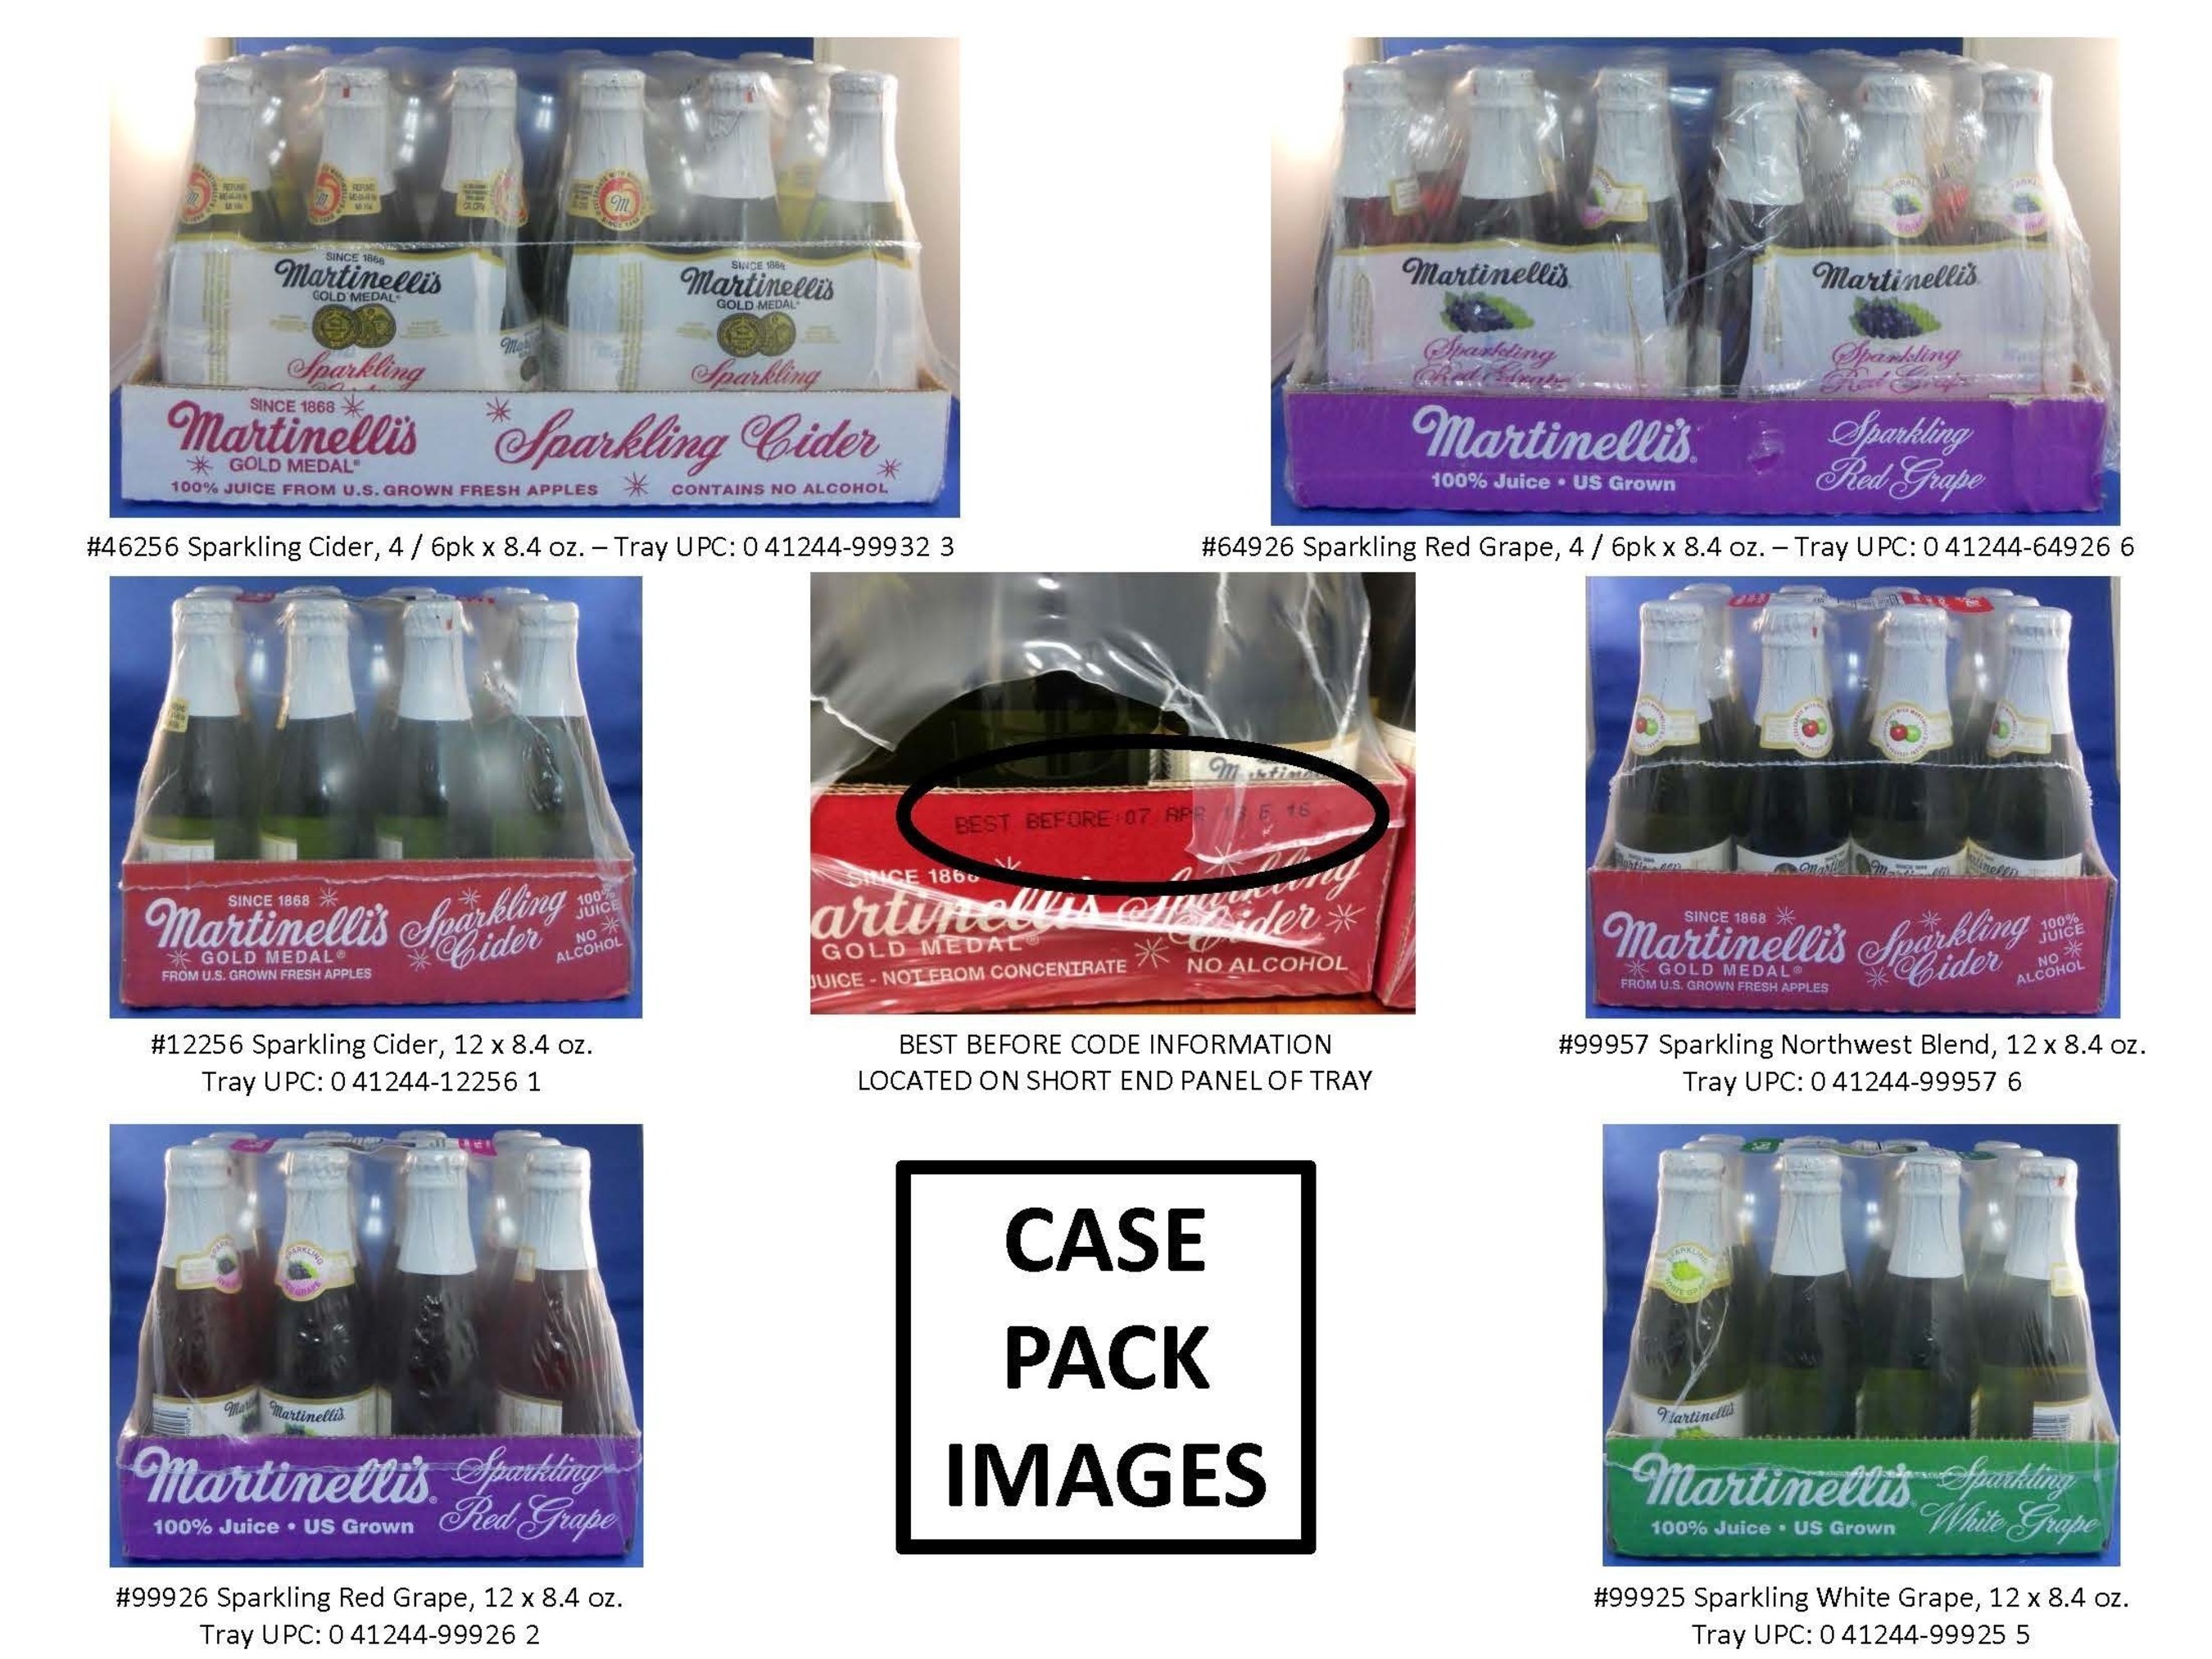 Case Pack Images